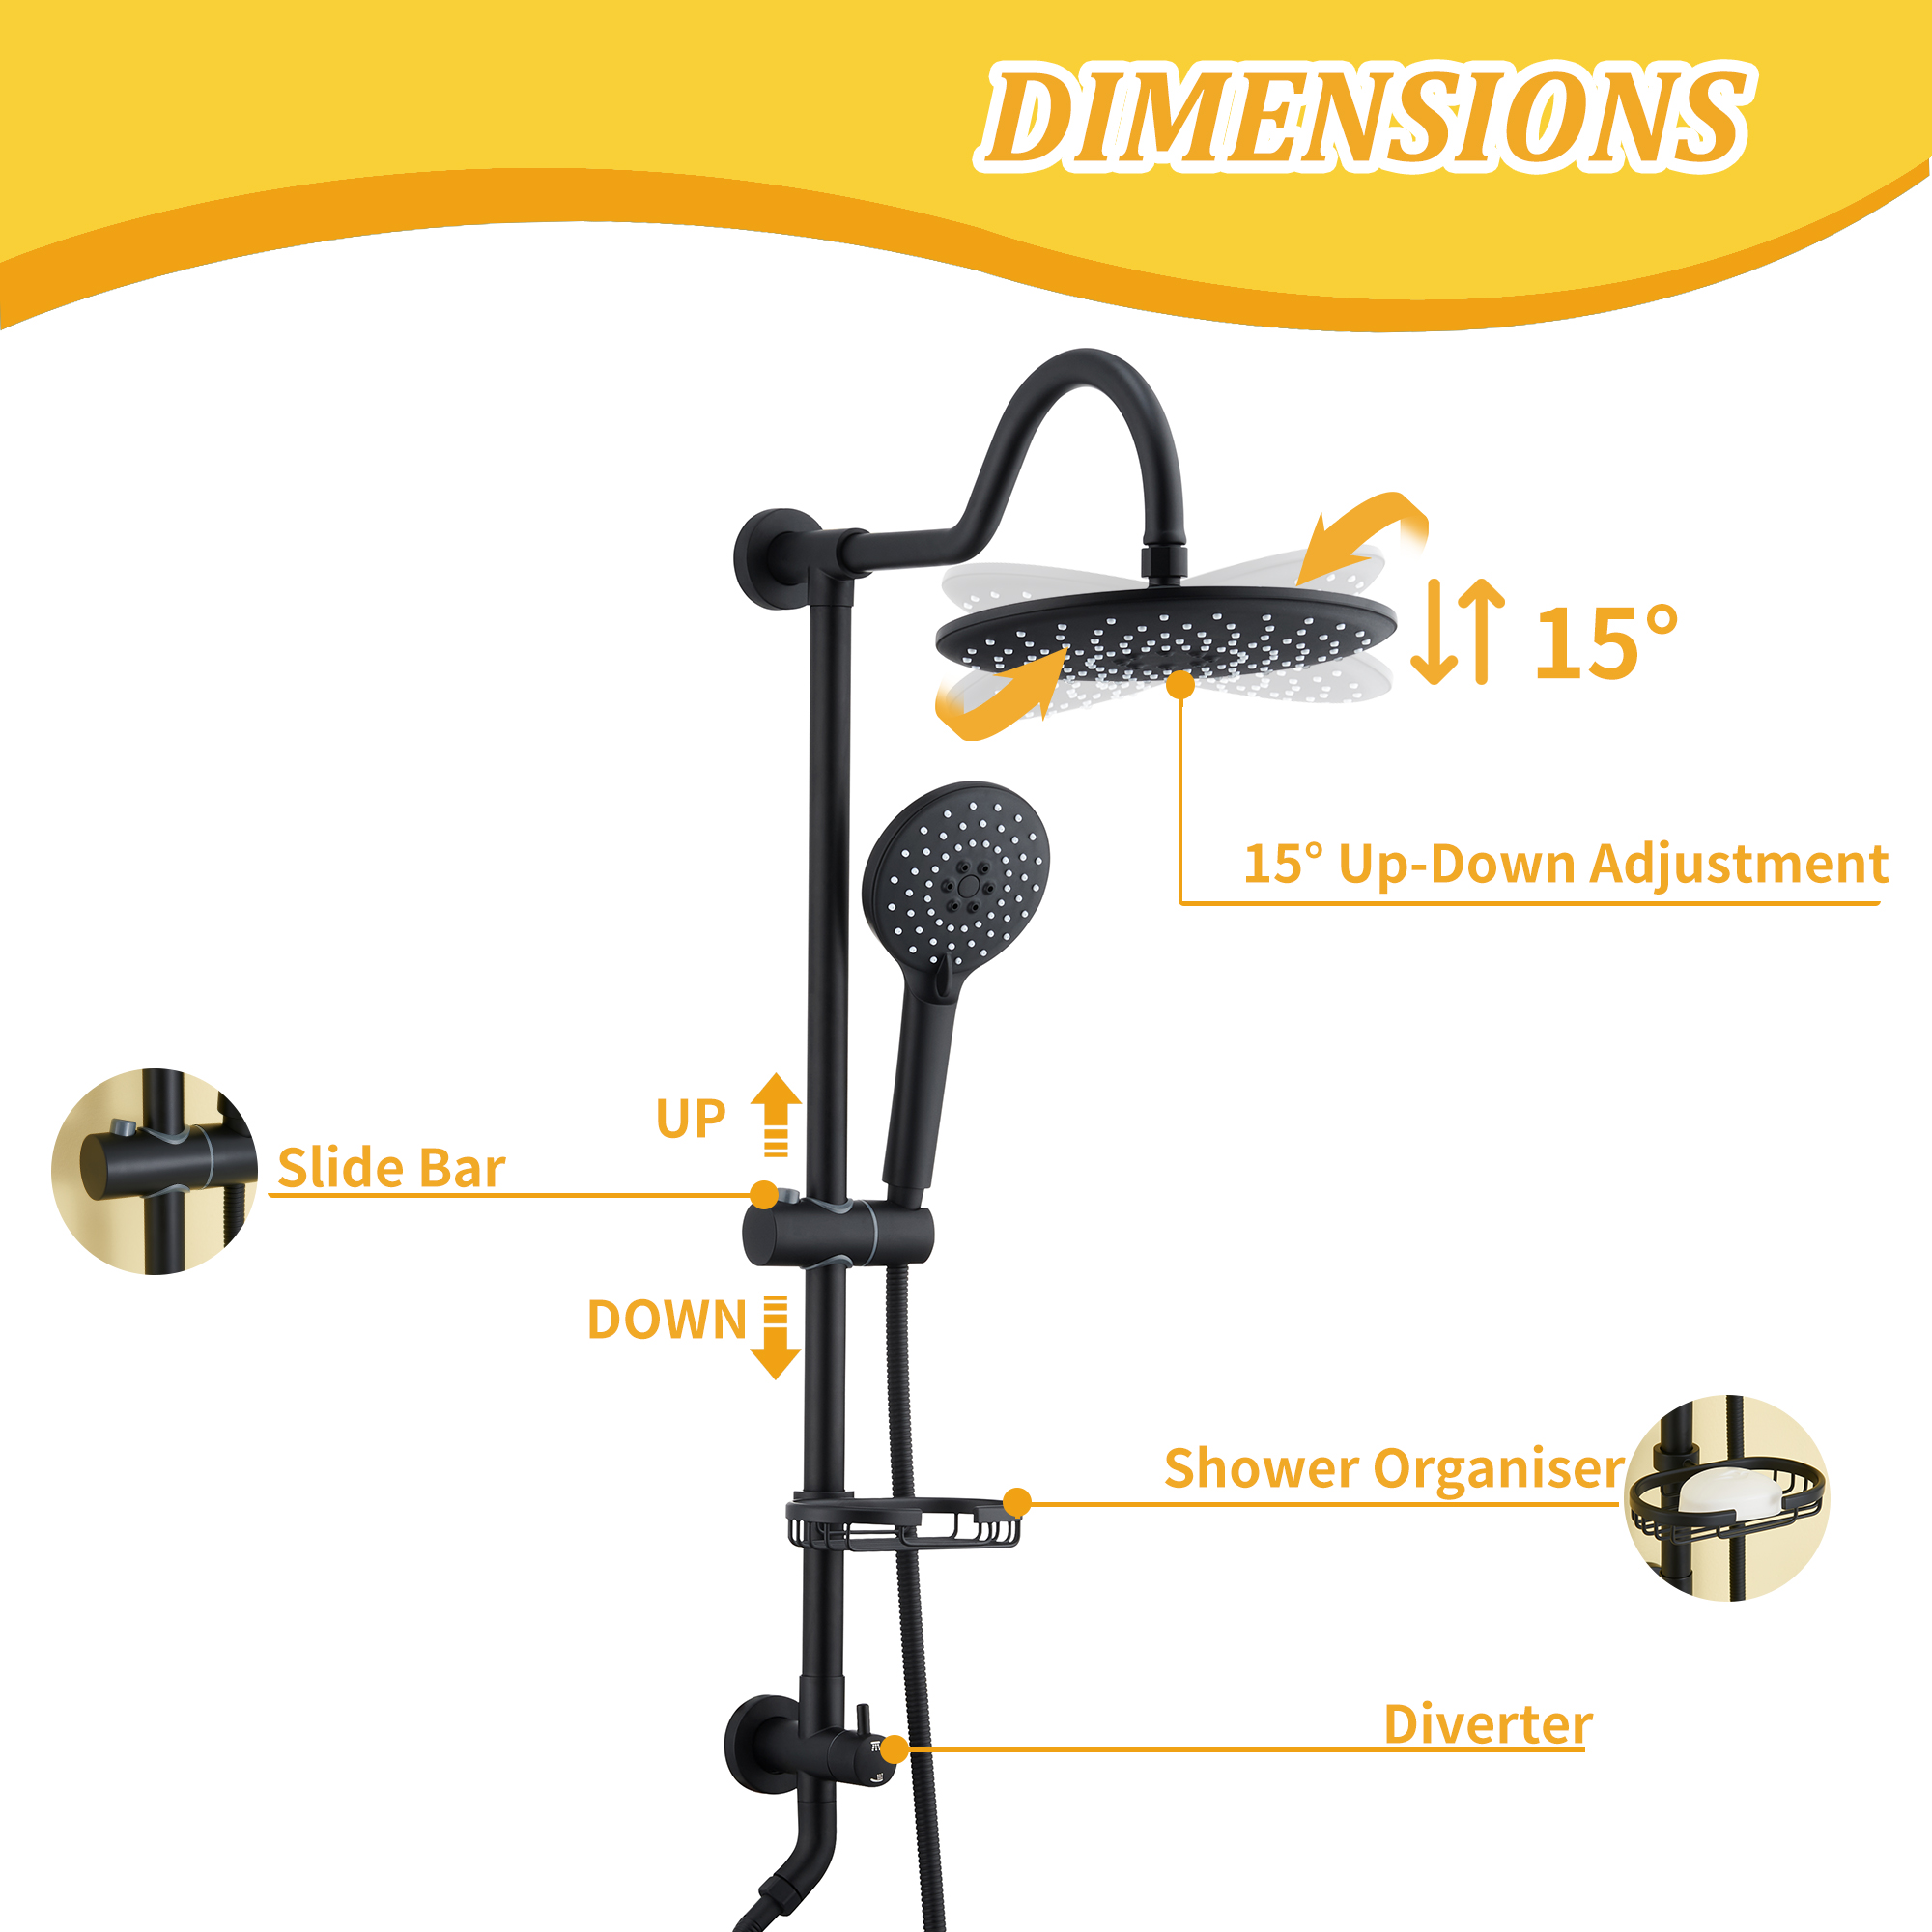 Mondawe ShowerSpas Shower System, with 10" Rain Showerhead, 4-Function Hand Shower, Adjustable Slide Bar and Soap Dish, Matte Black Finish